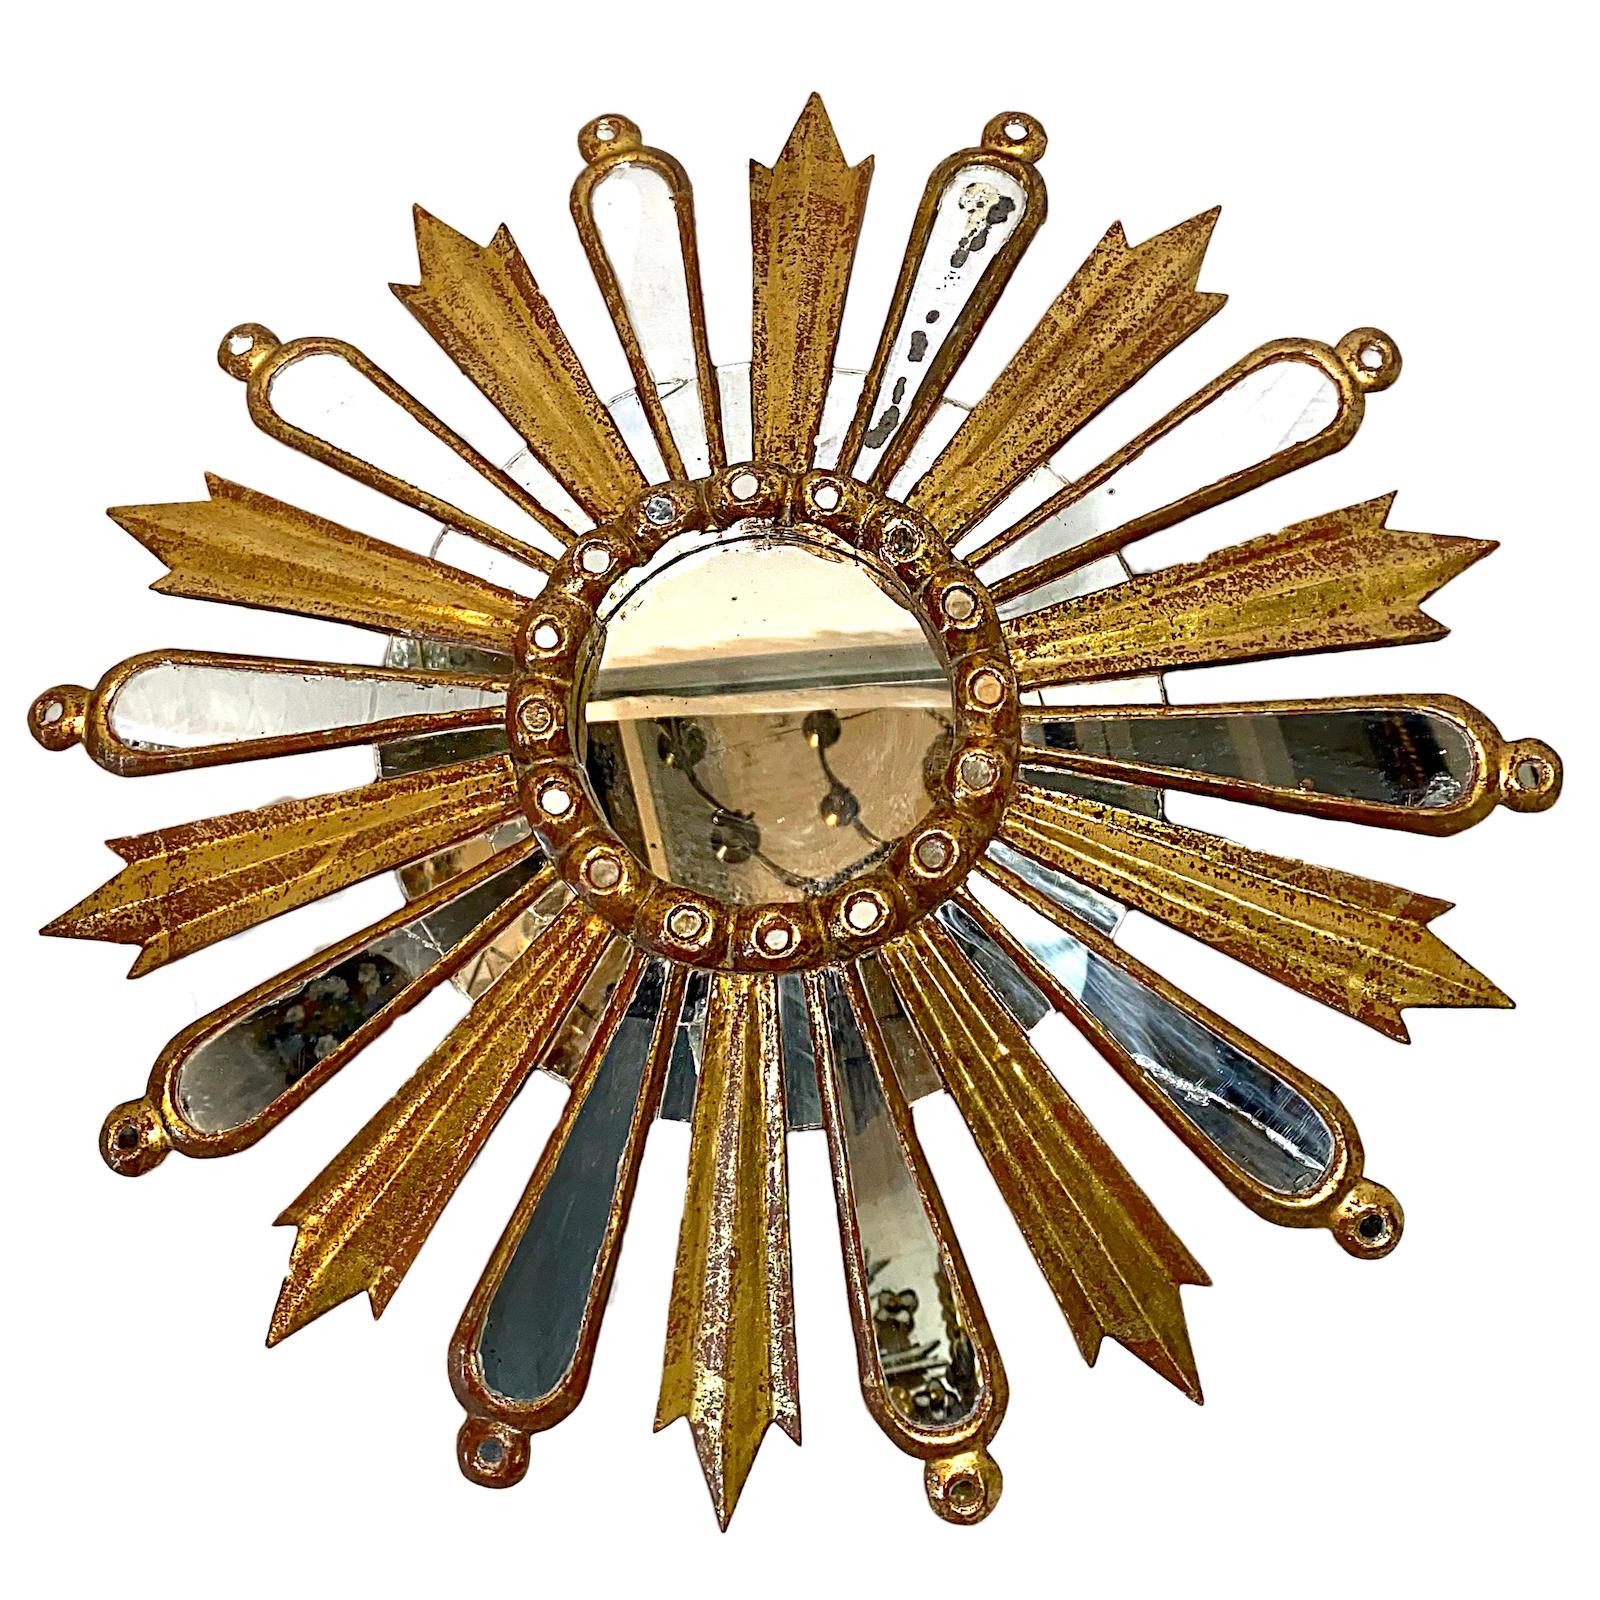 A circa 1920s Spanish giltwood sunburst mirror. 

Measurements:
Diameter 25